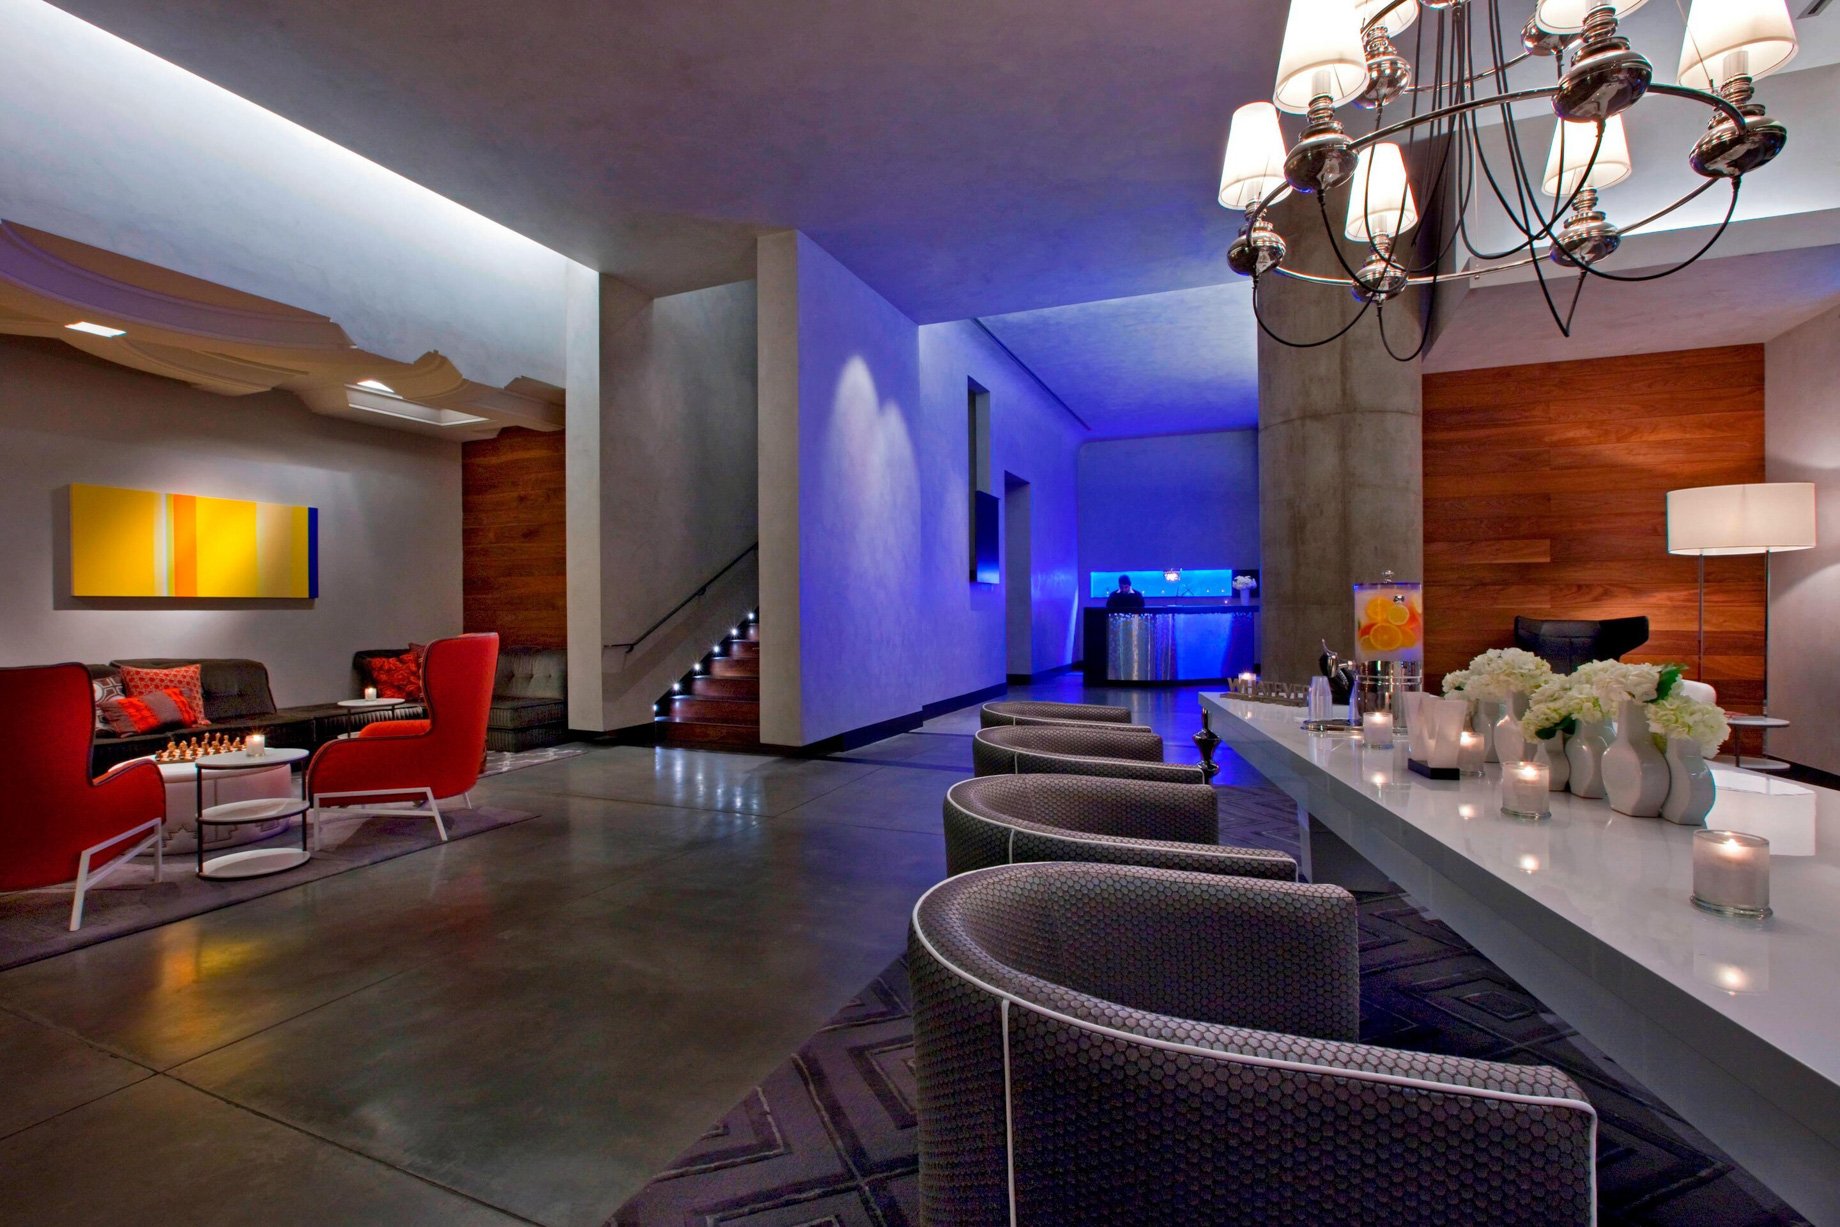 W Austin Hotel – Austin, TX, USA – Lobby Welcome and Concierge Desk